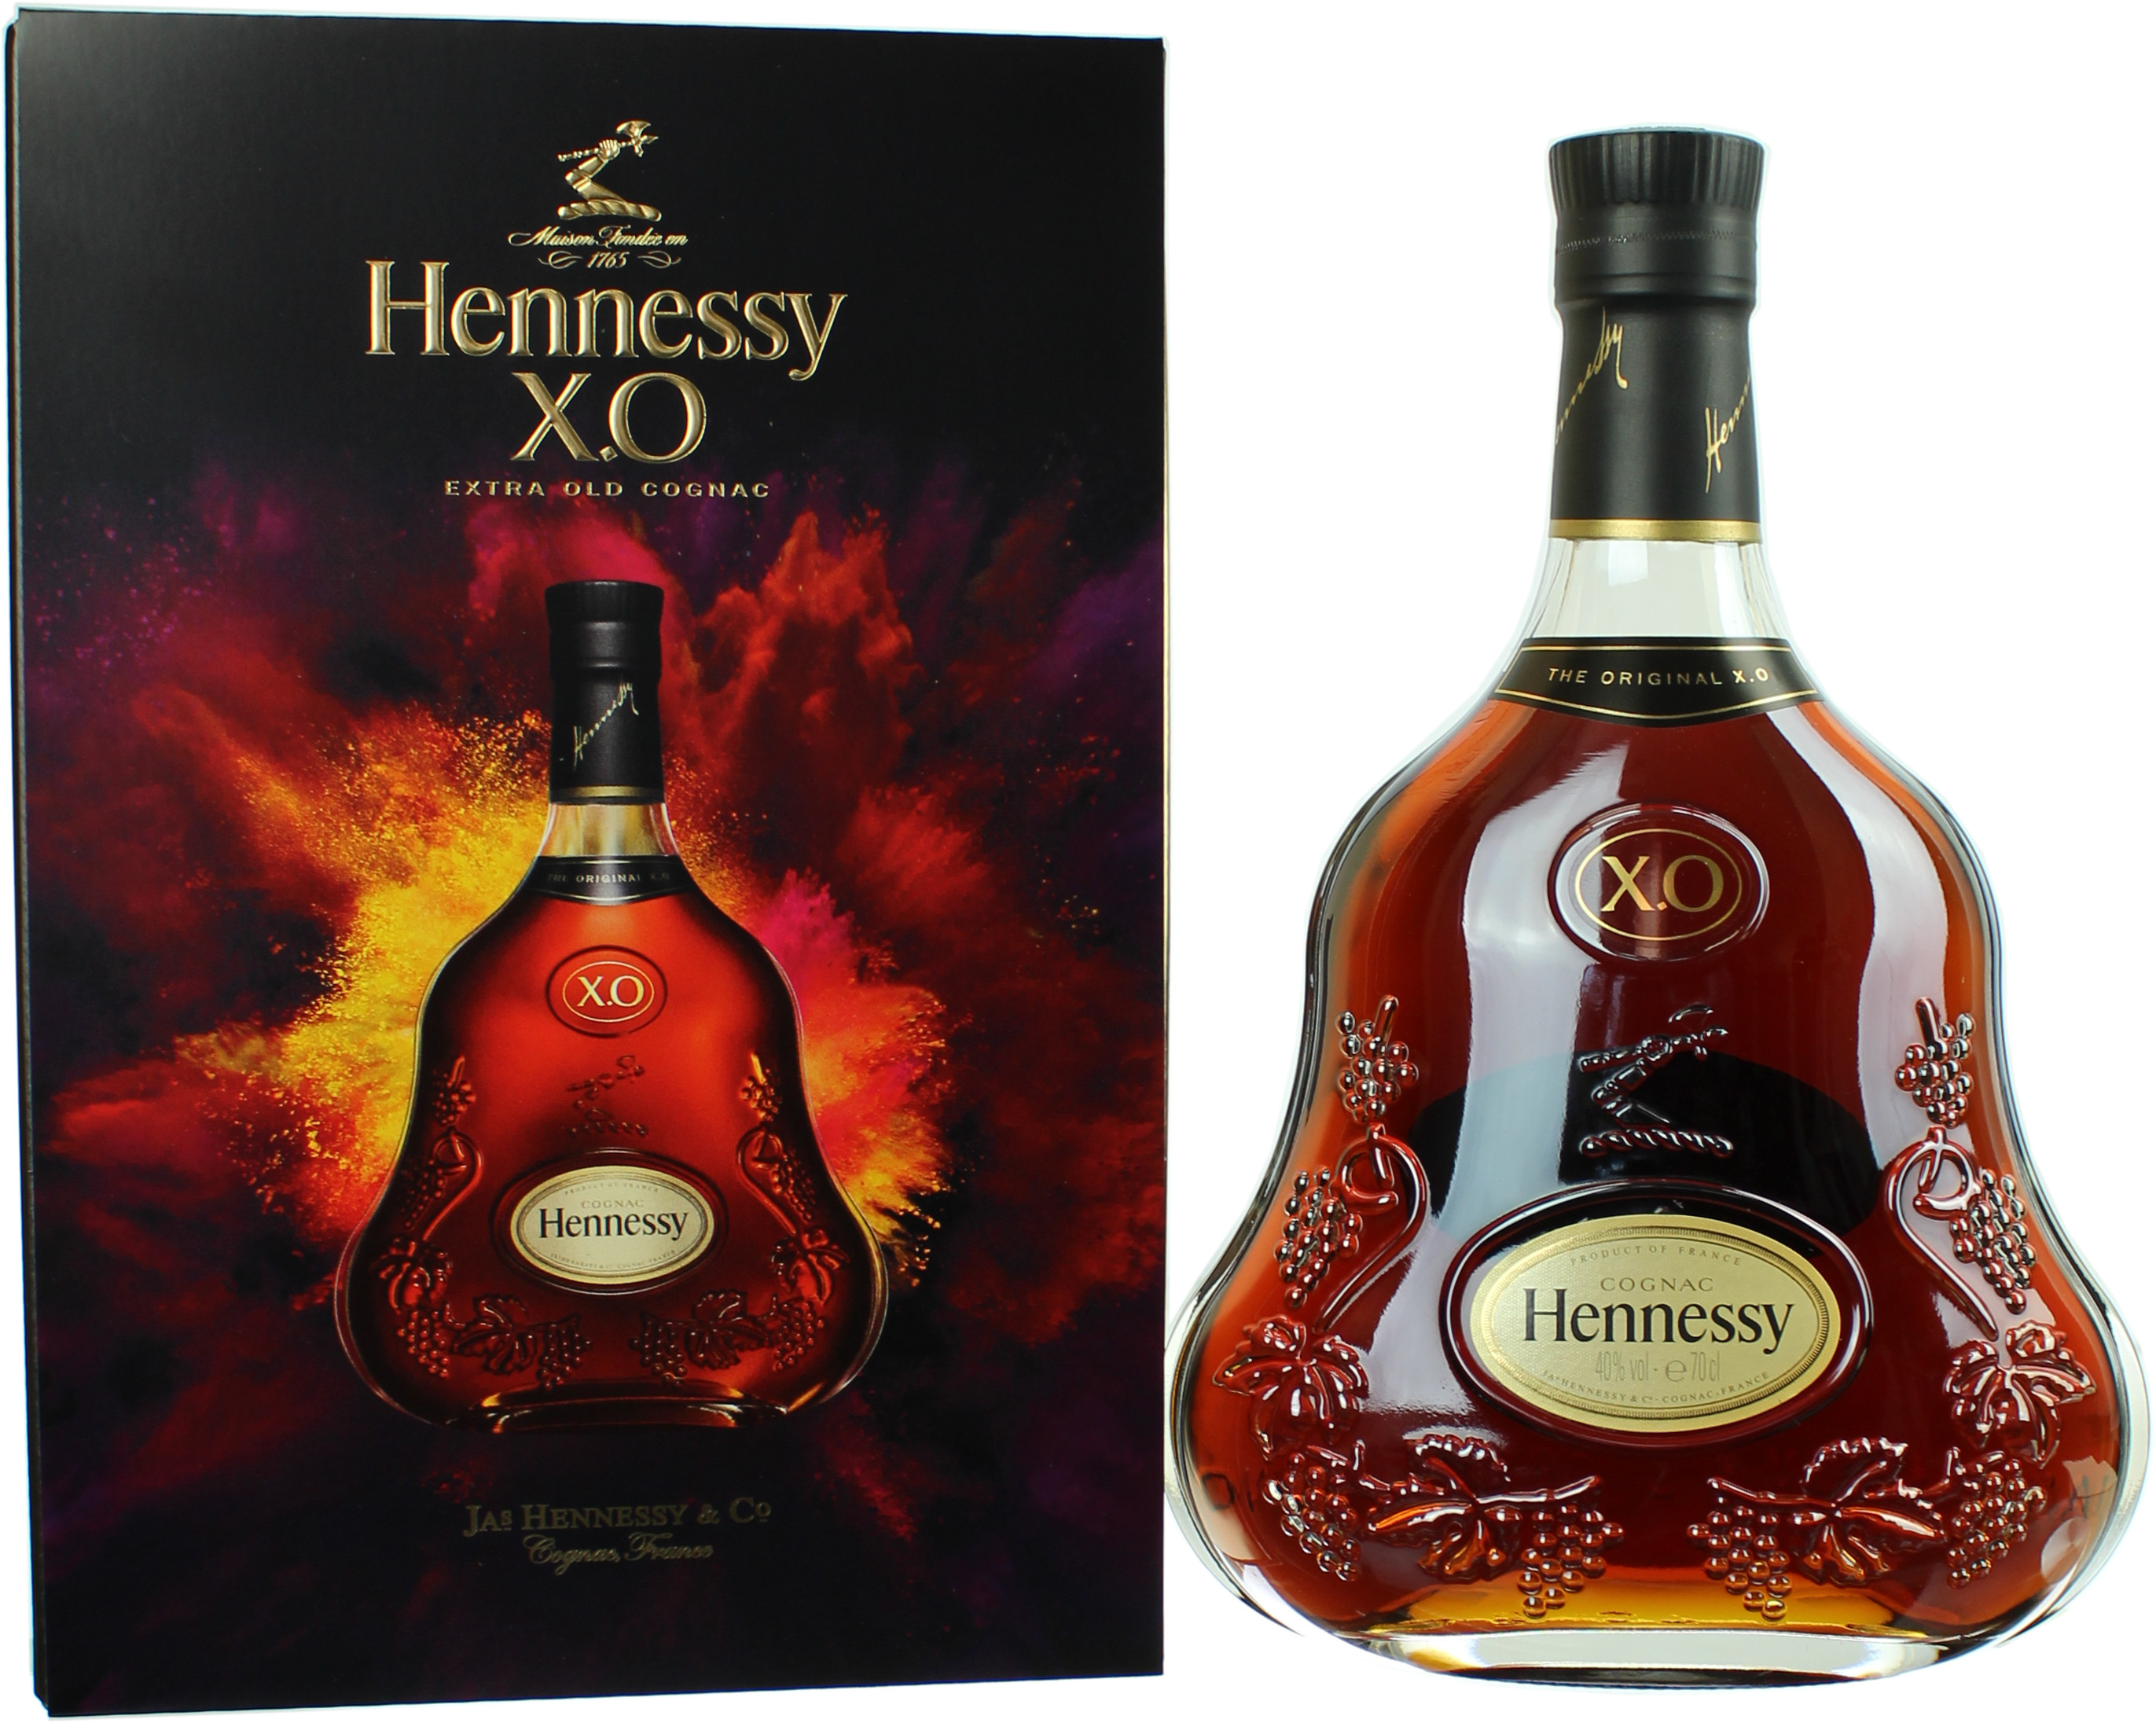 Хеннесси 0.7 оригинал. Hennessy Cognac 0.5 Хо. Коньяк Hennessy XO 0.7. Cognac x.o Hennessy коньяк. Коньяк Хеннесси Хо 0.7 Cognac.